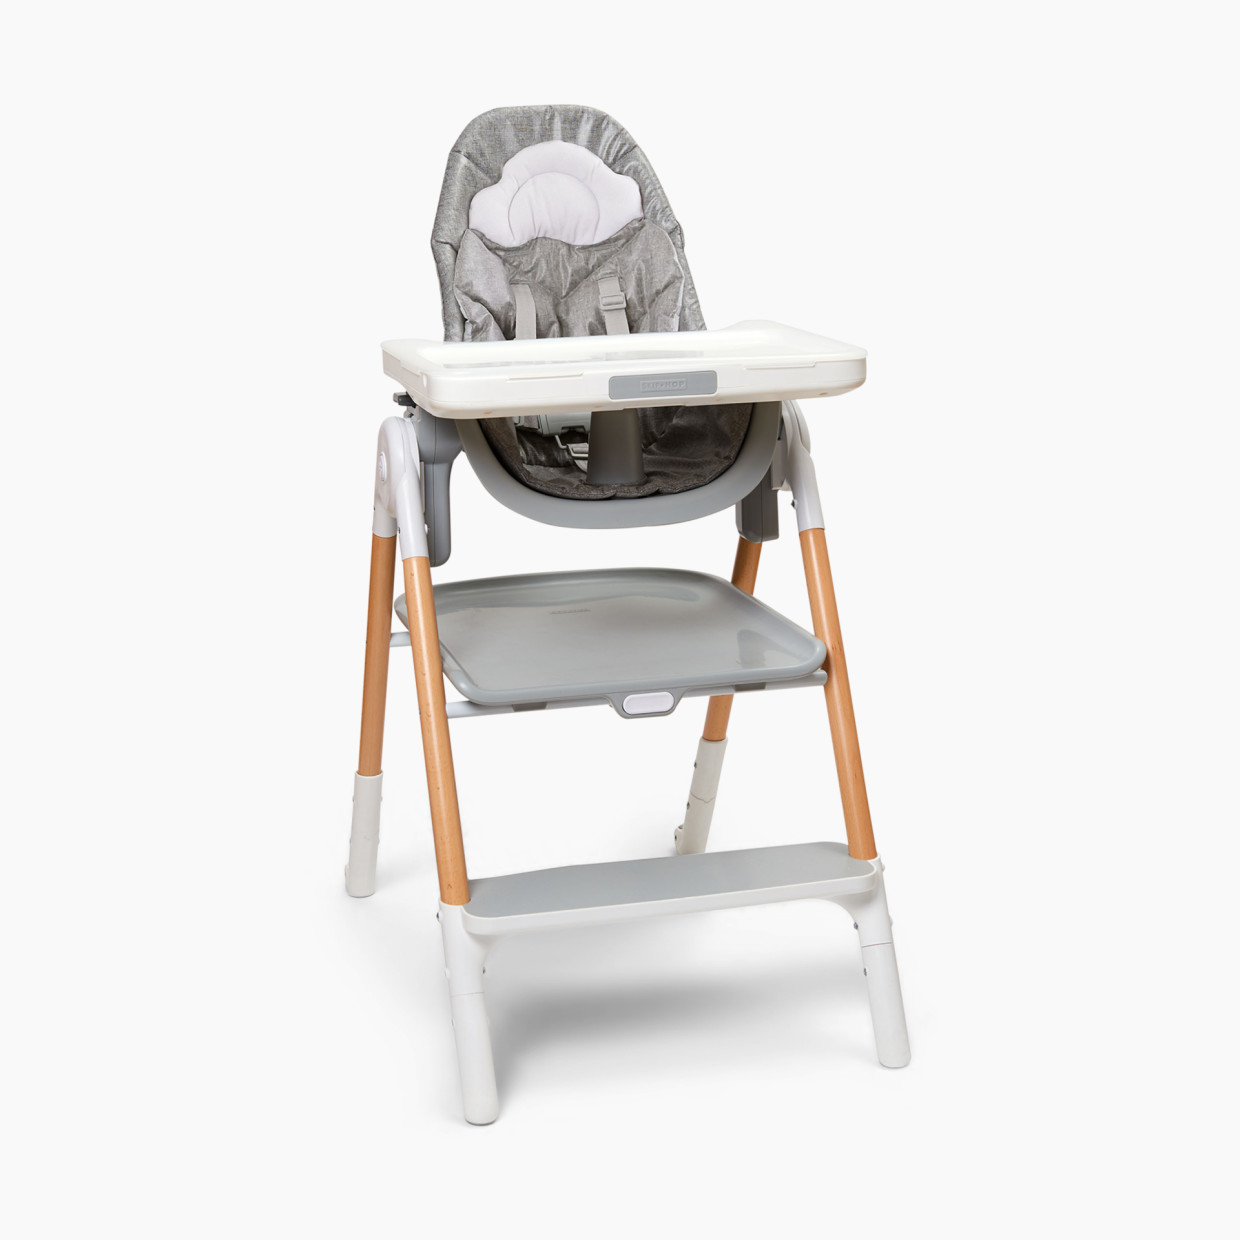 Skip Hop Sit-To-Step High Chair - Grey/White.